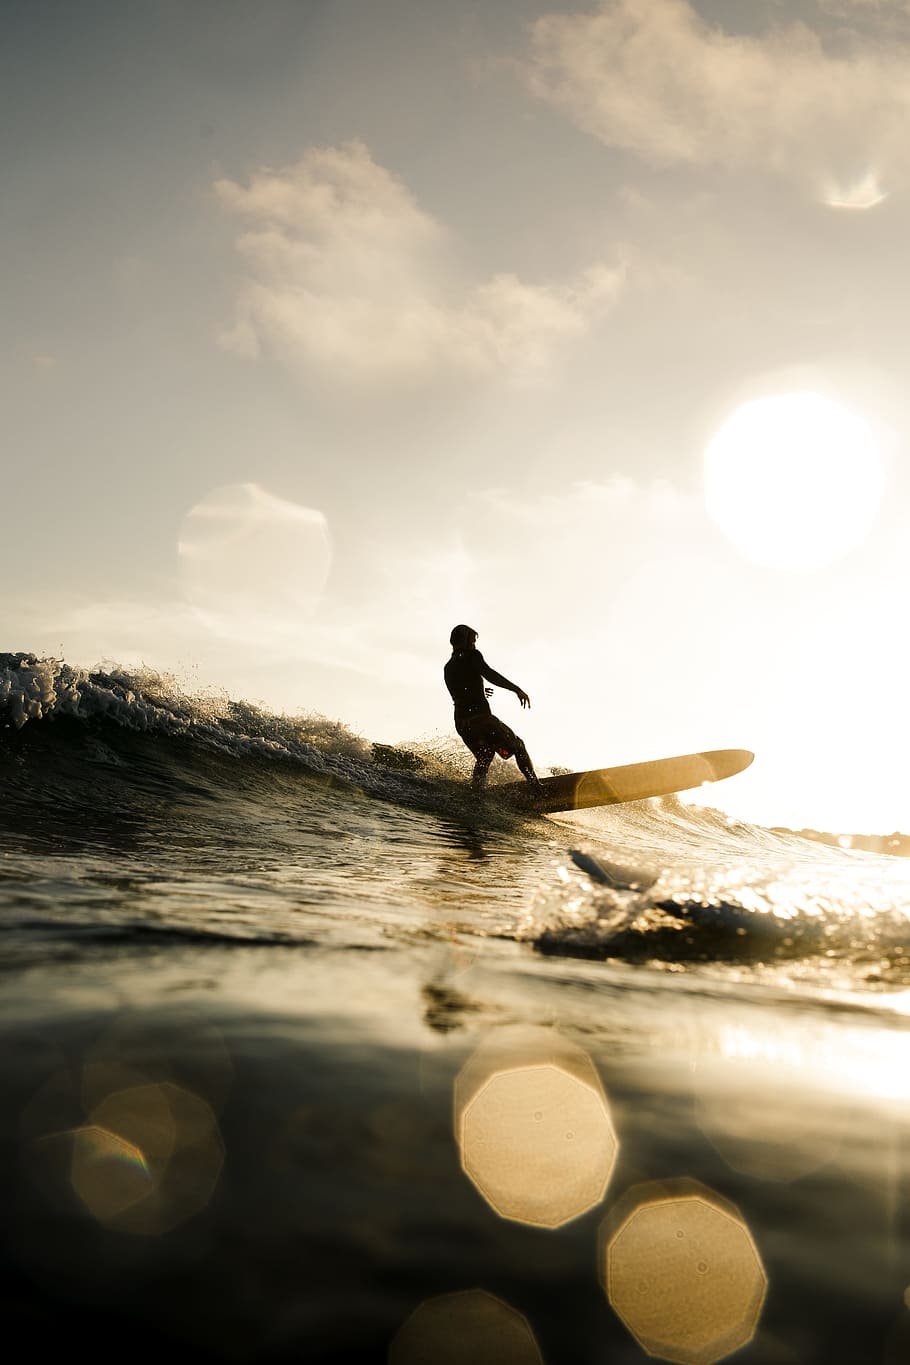 HD wallpaper: person surfing on wave, surfer, longboard, silhouette, yellow